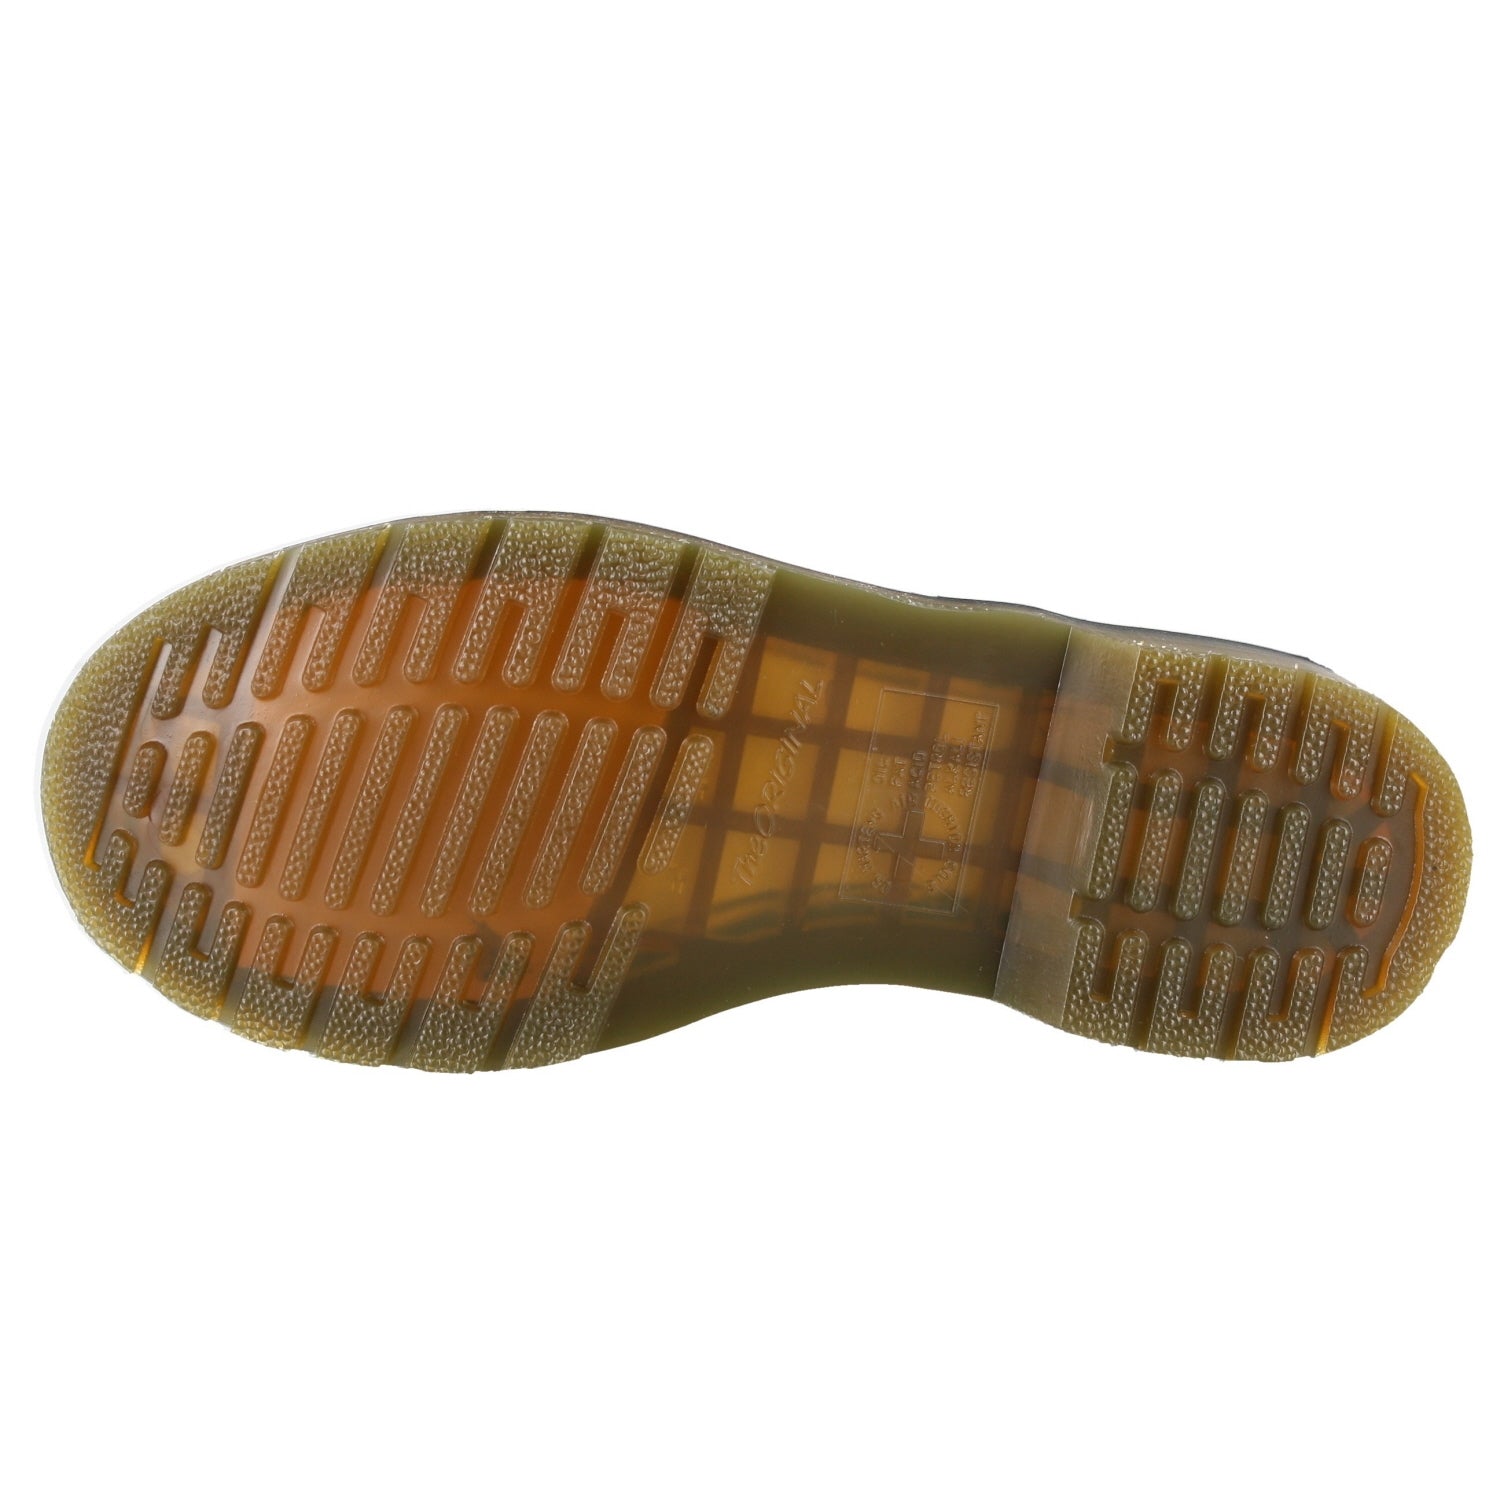 the original dr martens air cushioned sole